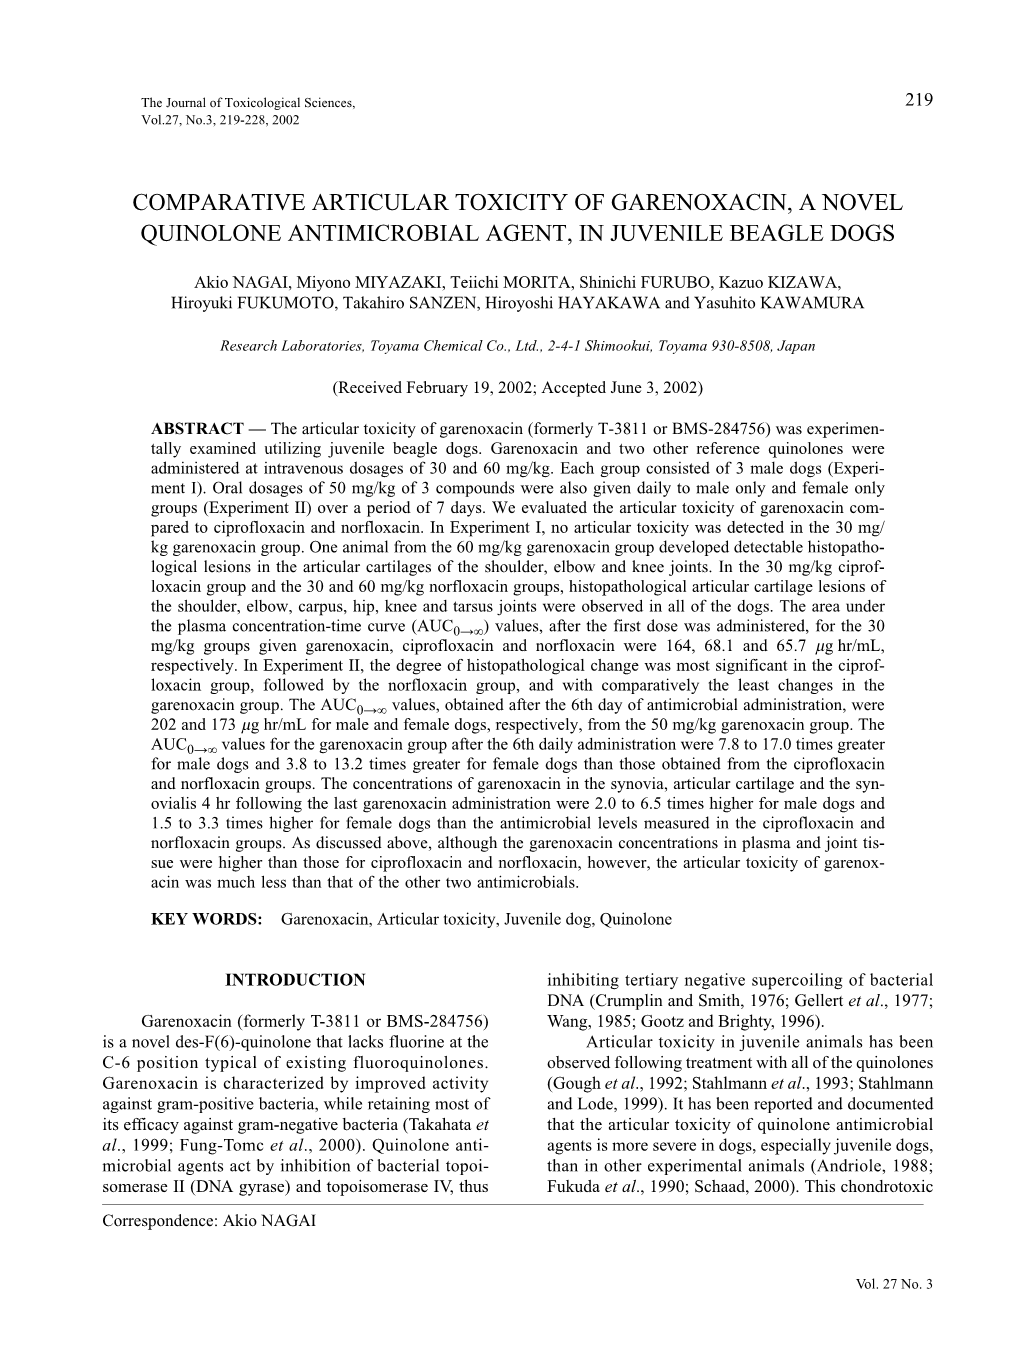 Comparative Articular Toxicity of Garenoxacin, a Novel Quinolone Antimicrobial Agent, in Juvenile Beagle Dogs